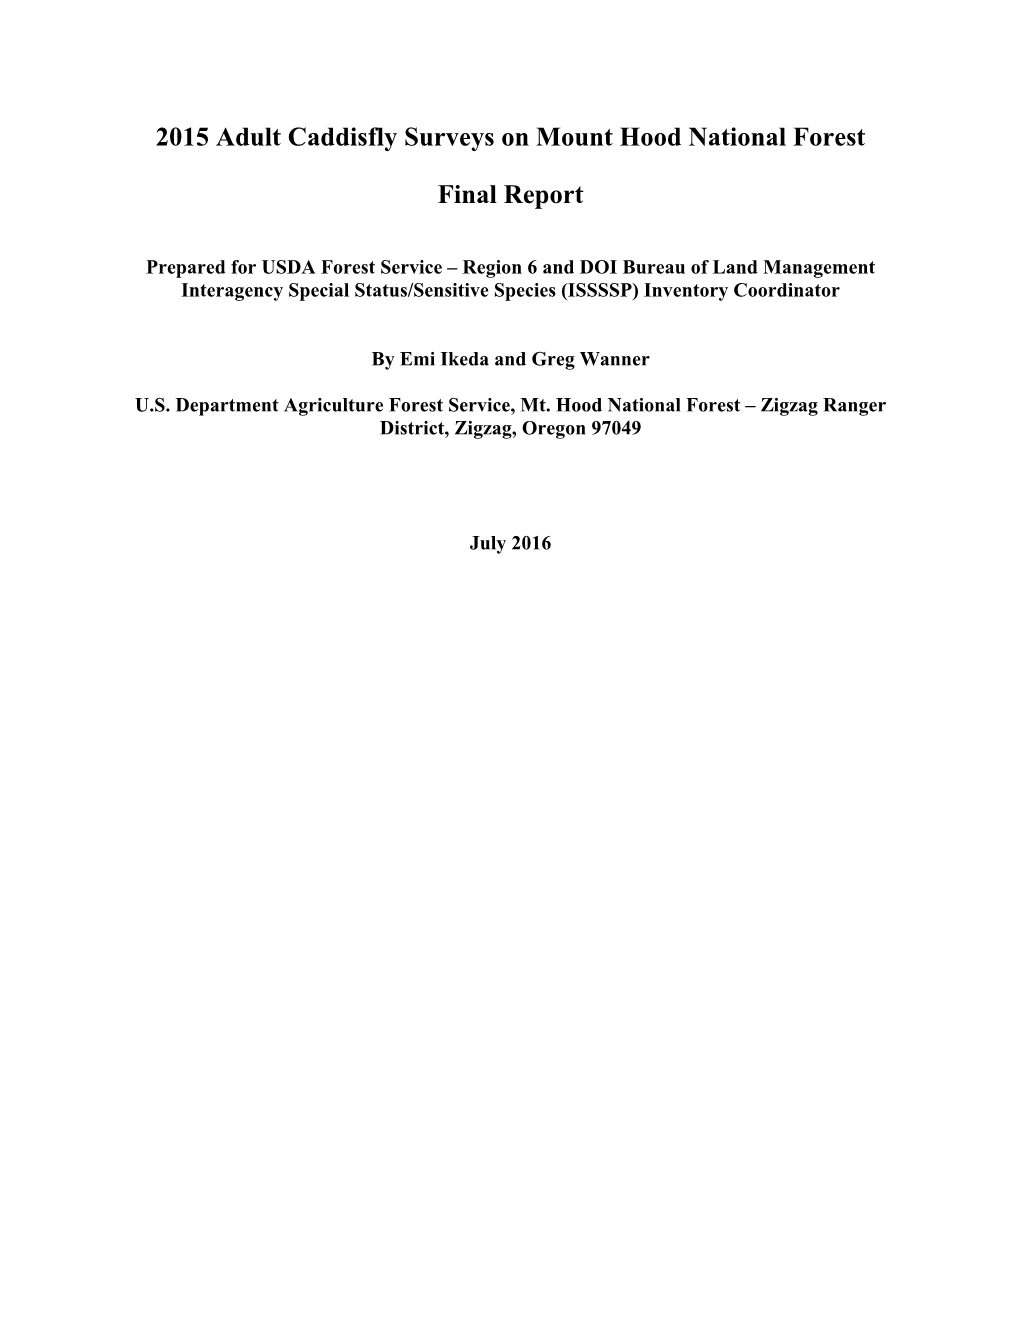 Mount Hood Adult Caddisfly Report